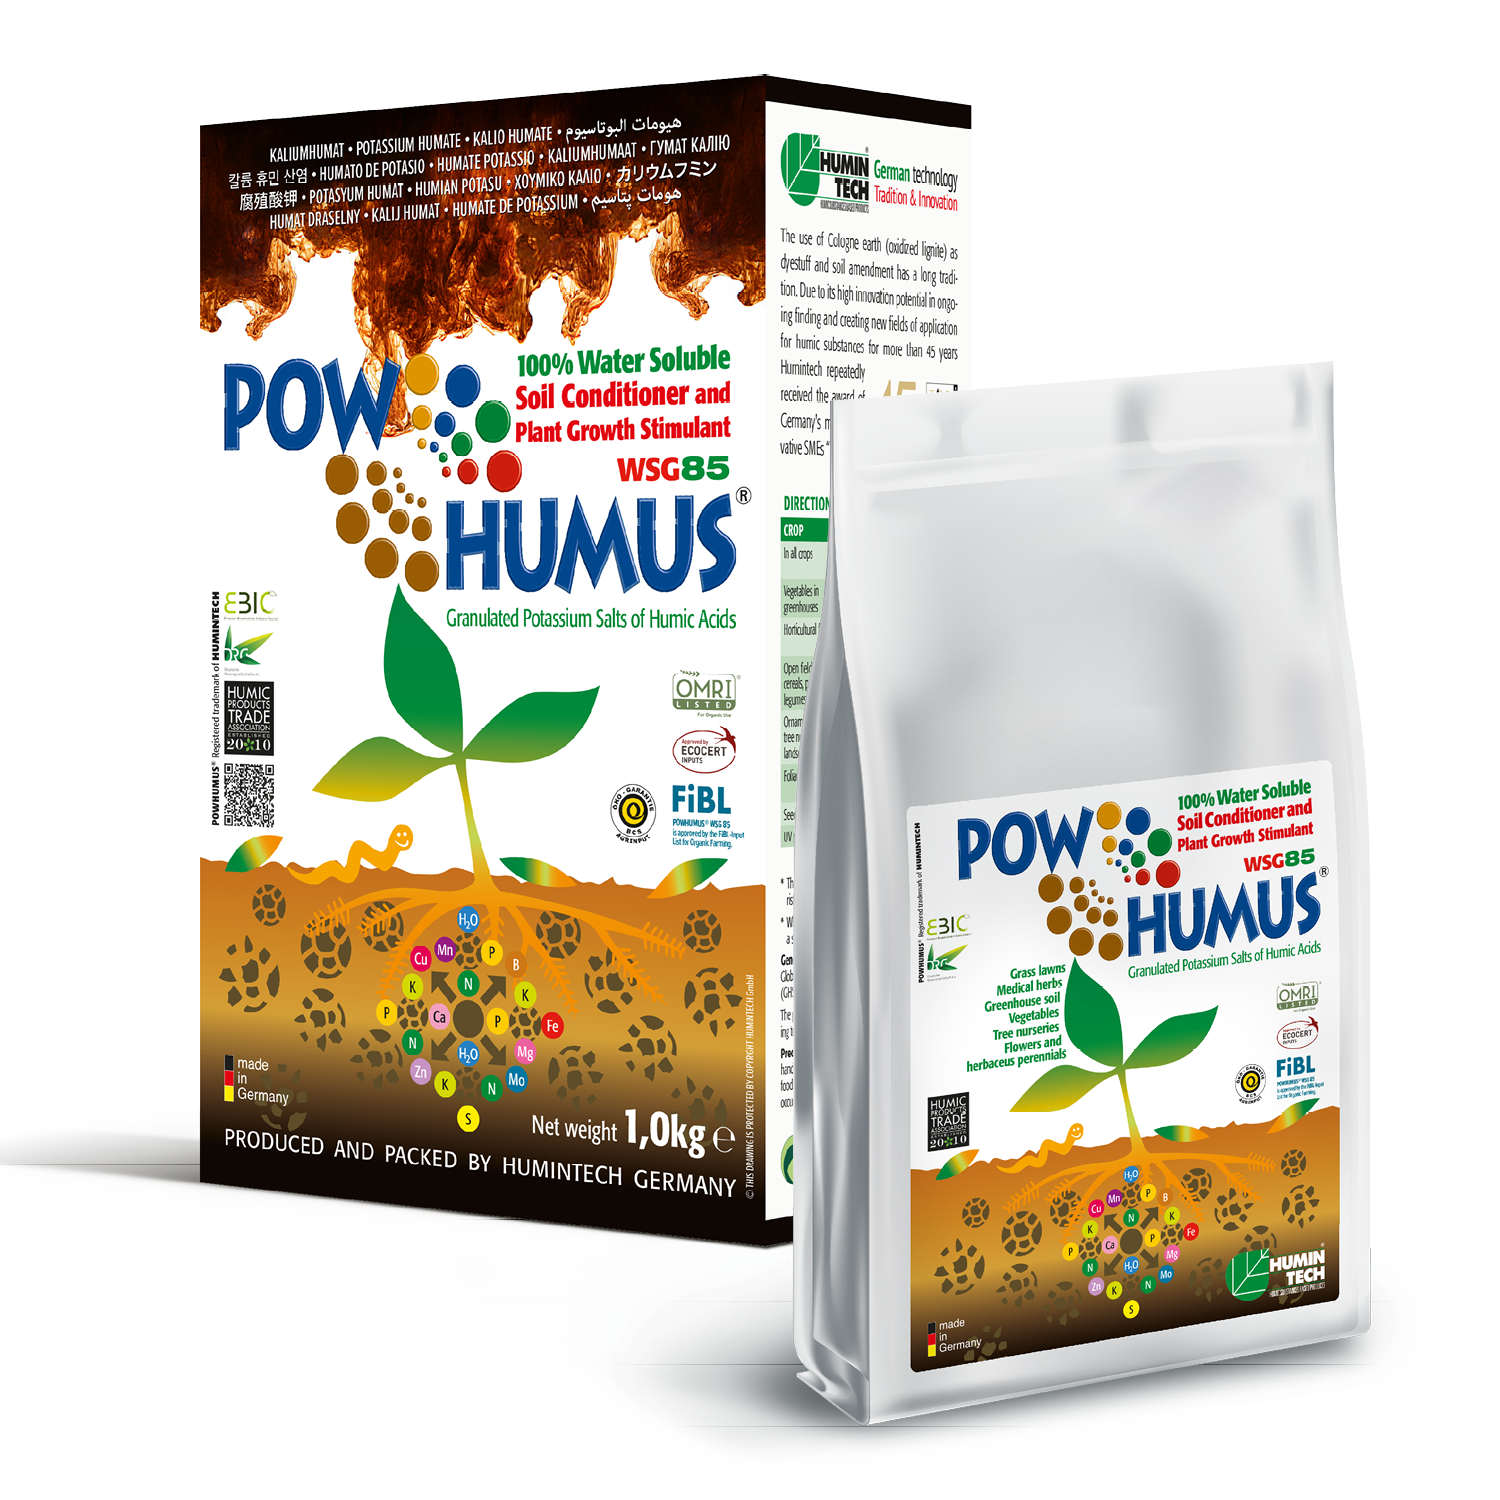 POWHUMUS WSG 85 100% water soluble Organic Soil Conditioner